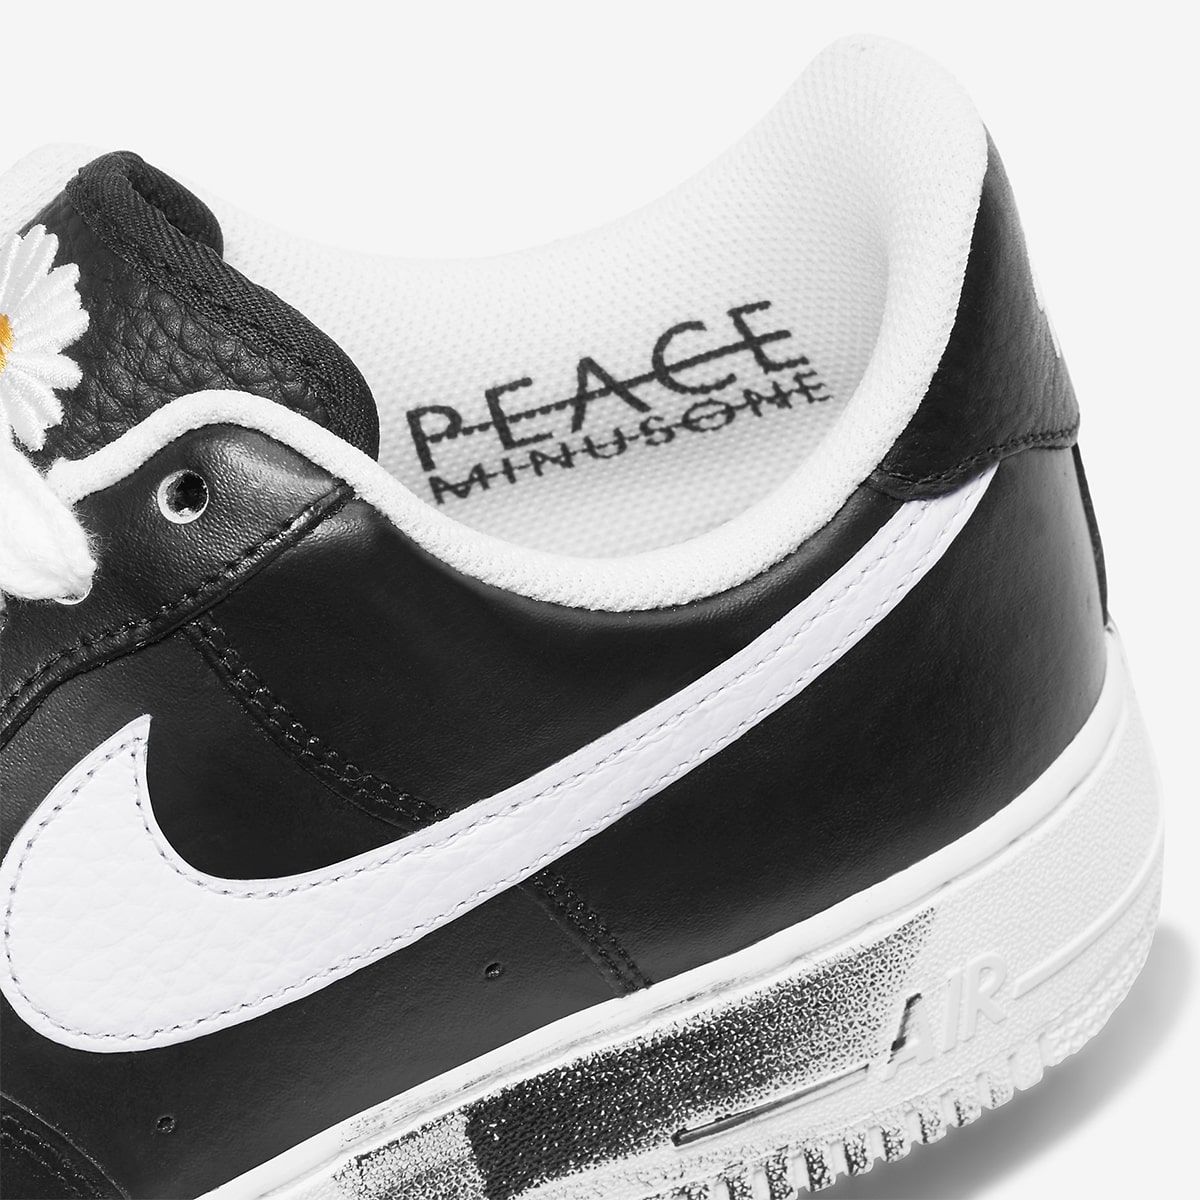 Where to Buy G-Dragon's PEACEMINUSONE x Nike Air Force 1 “Para 